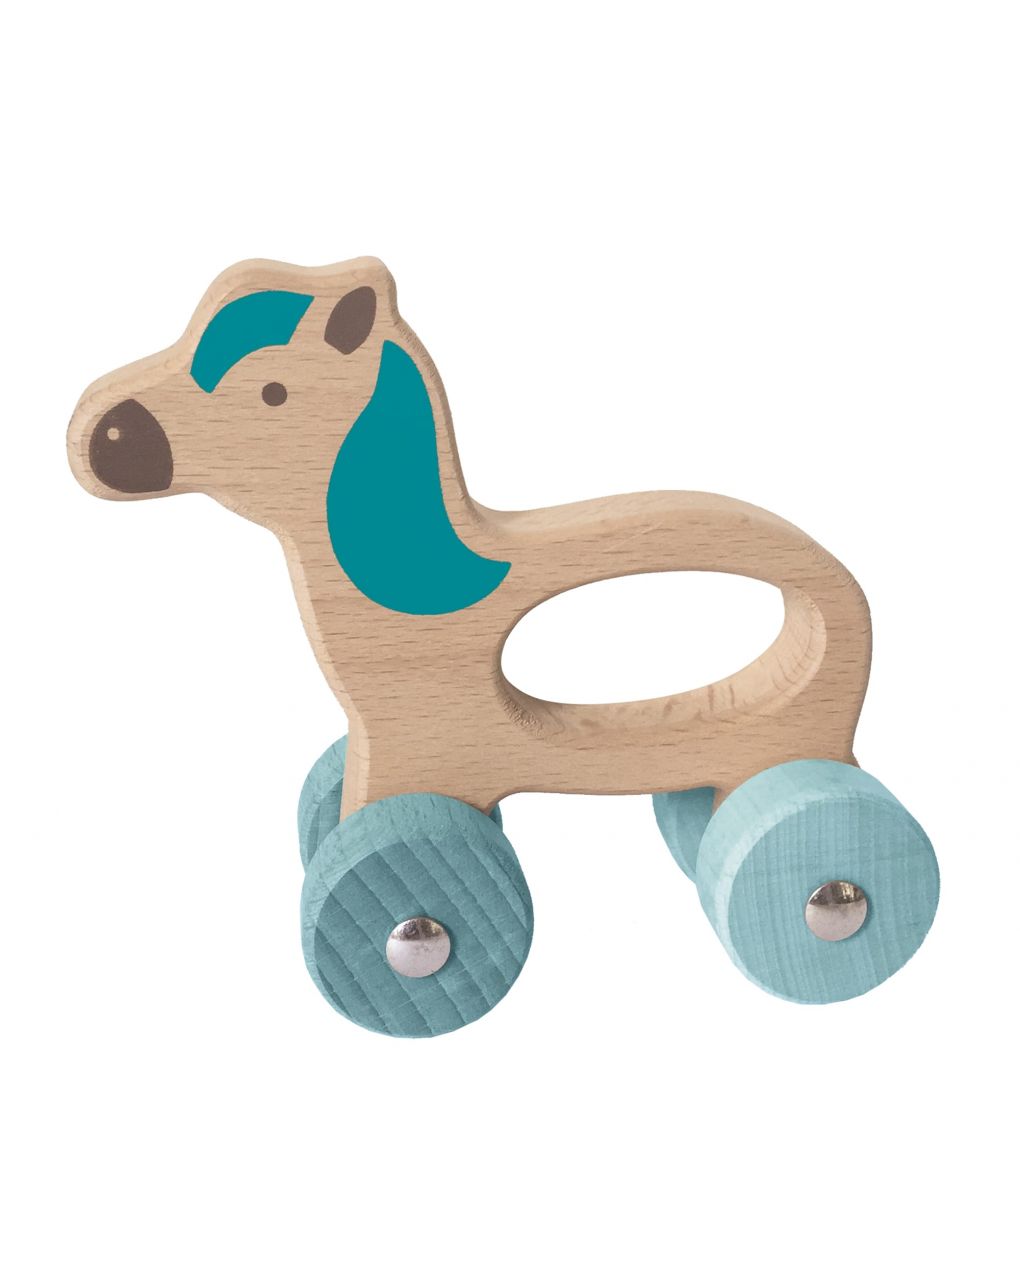 Wood n play - animali in legno con ruote - Wood'N'Play